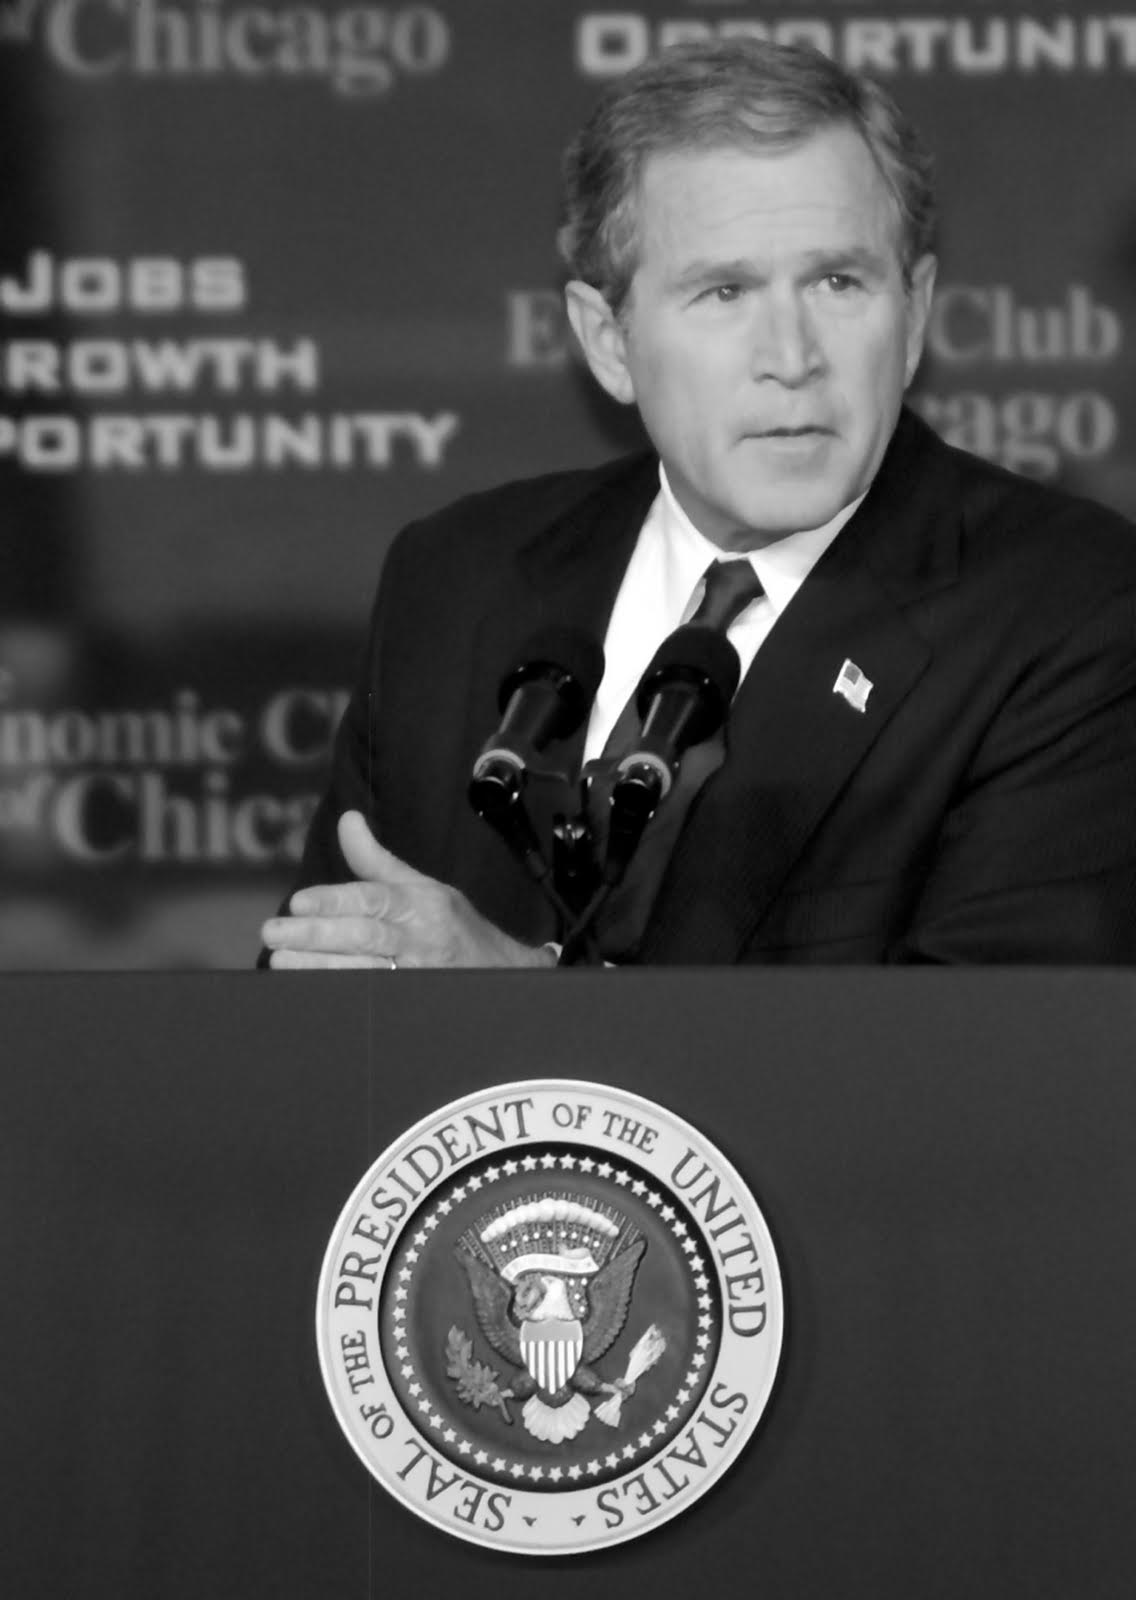 George W. Bush: President, Texas governor, owner Texas Rangers, MLB